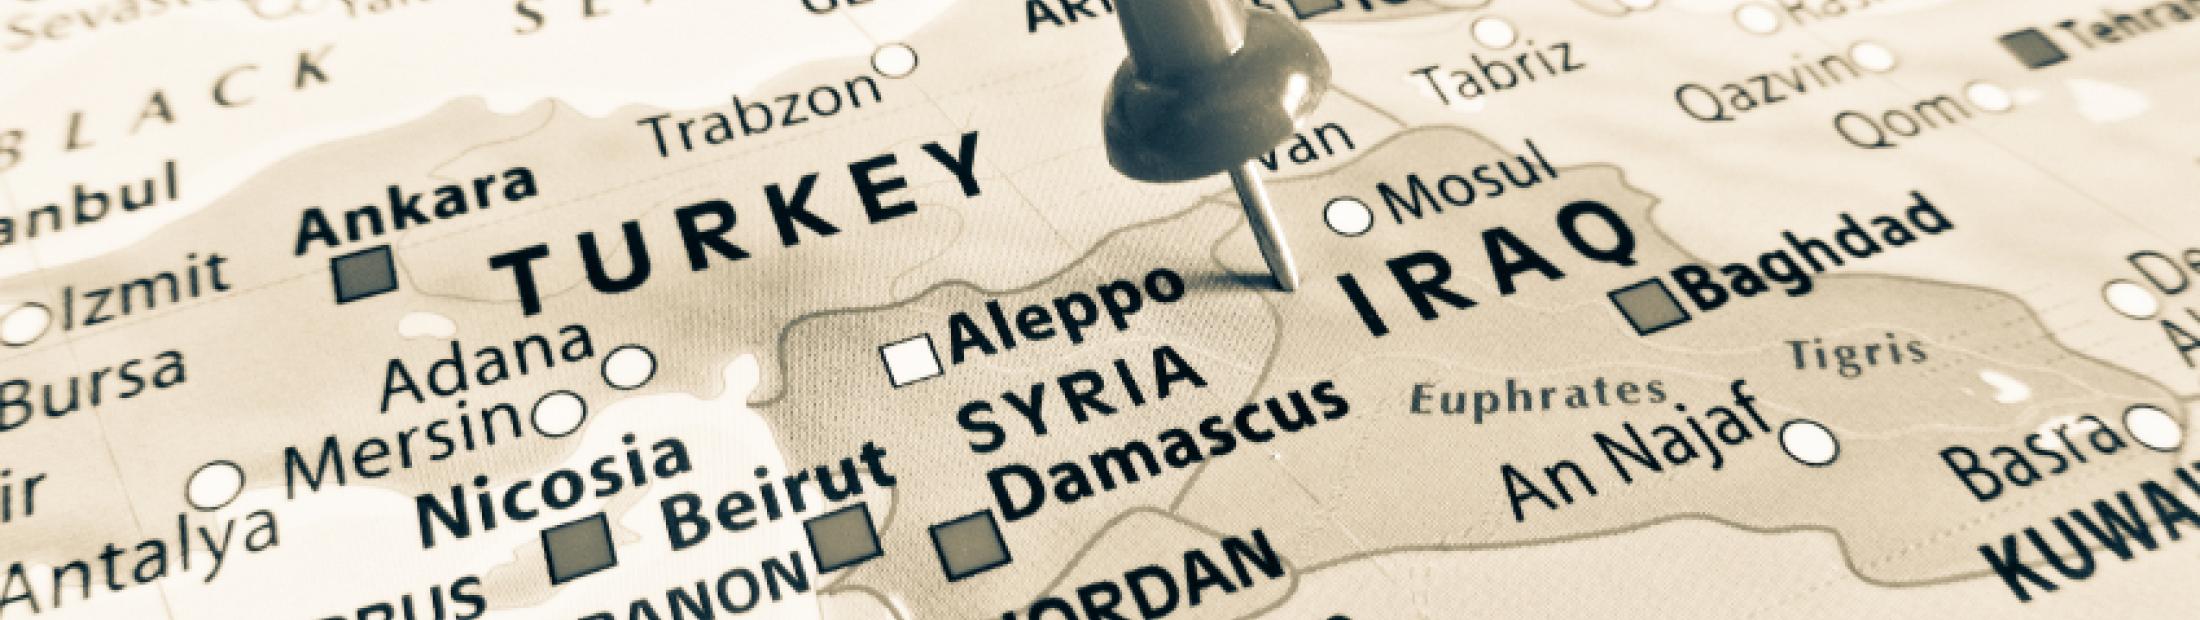 ¿Qué está pasando en Siria? 5 claves para entenderlo